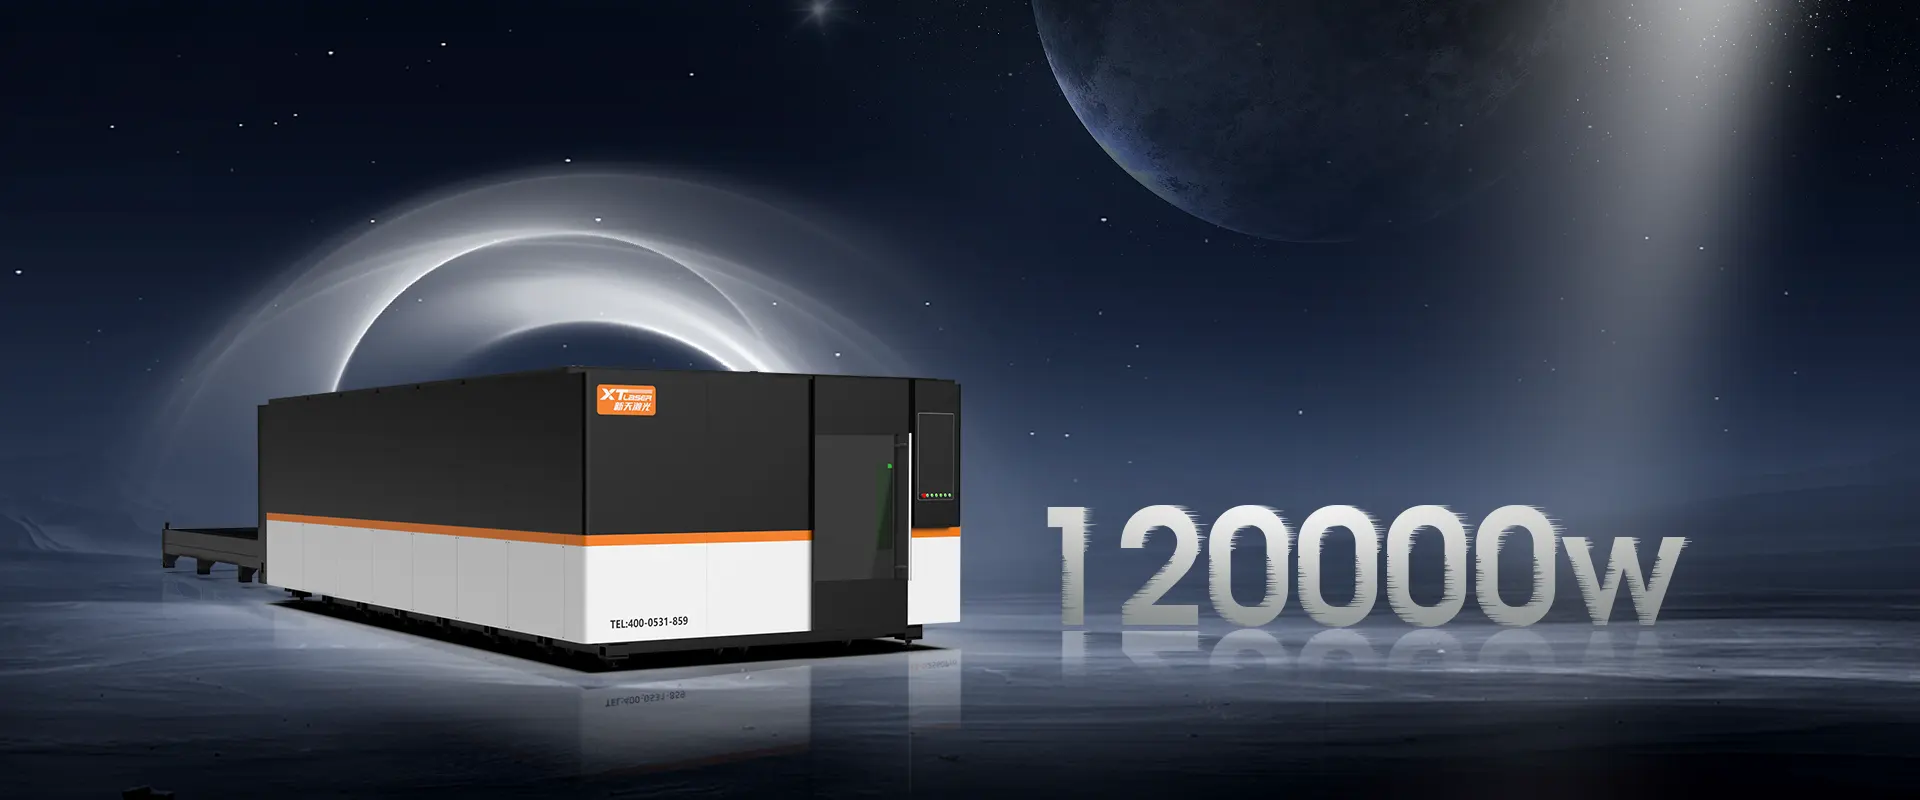 120000W ultra high power laser cutting machine